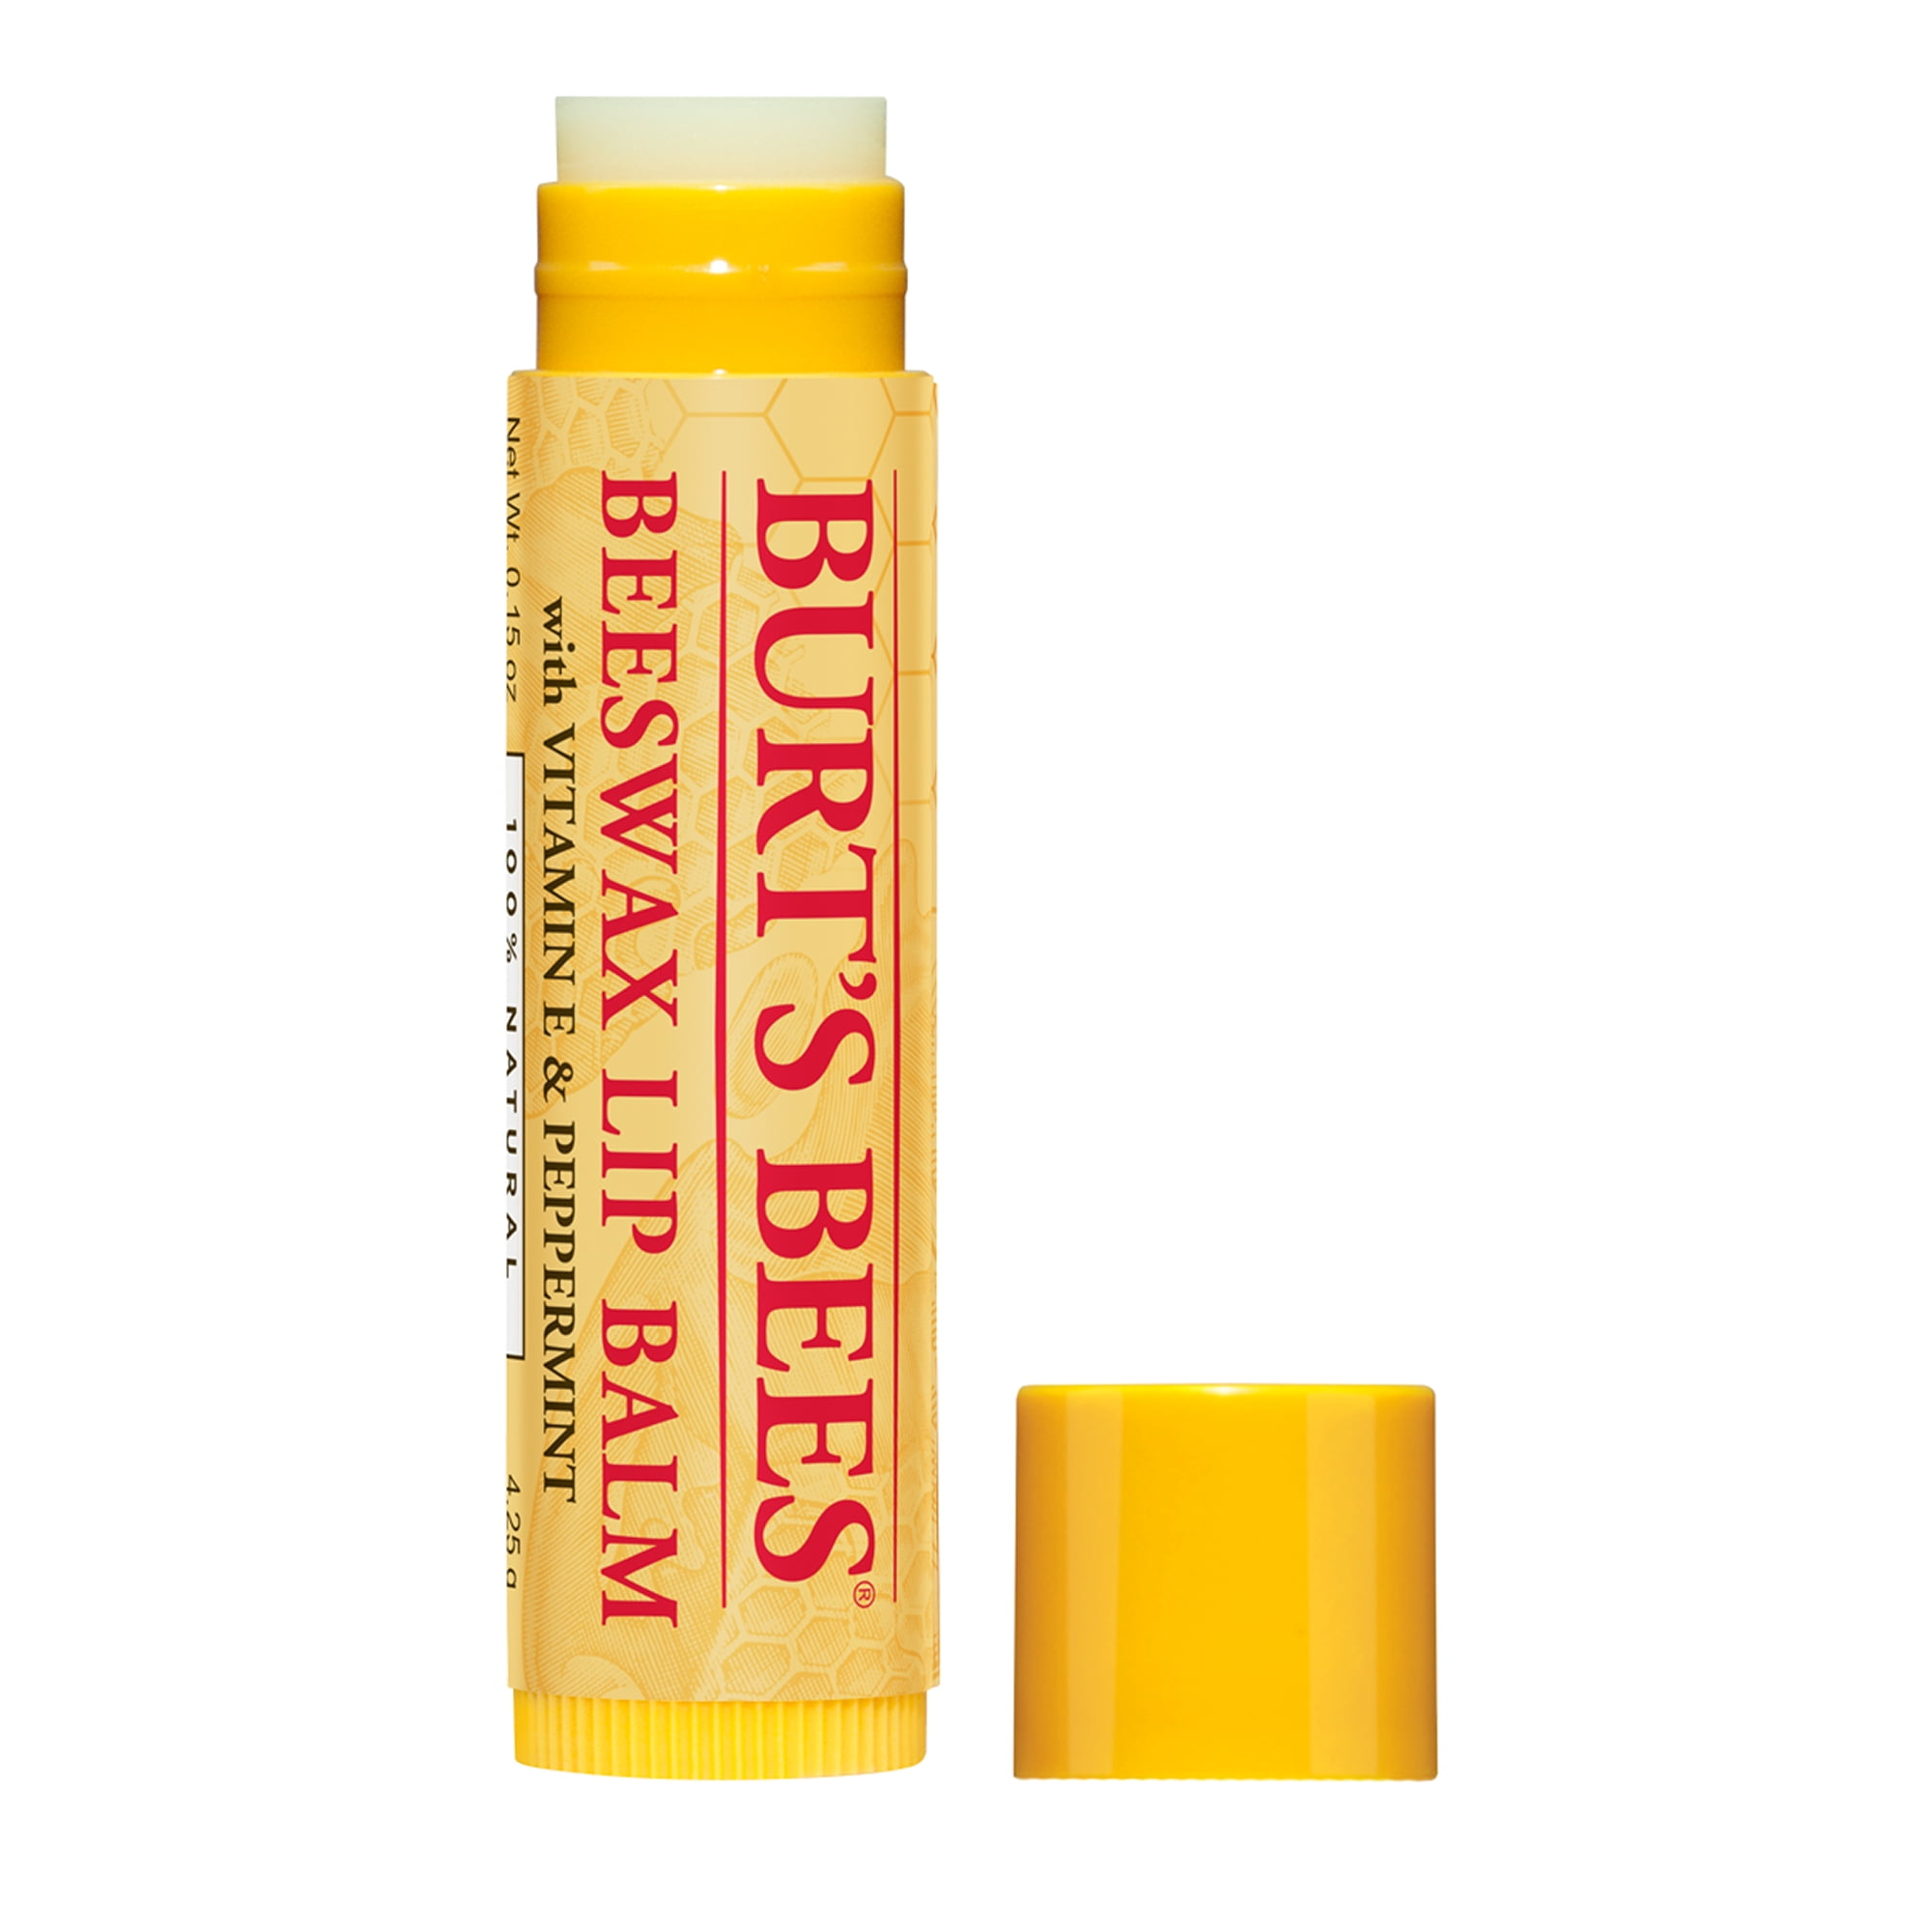 Burt's Bees 100% Natural Moisturizing Lip Balm, Original Beeswax with Vitamin E & Peppermint Oil - 1 Tube